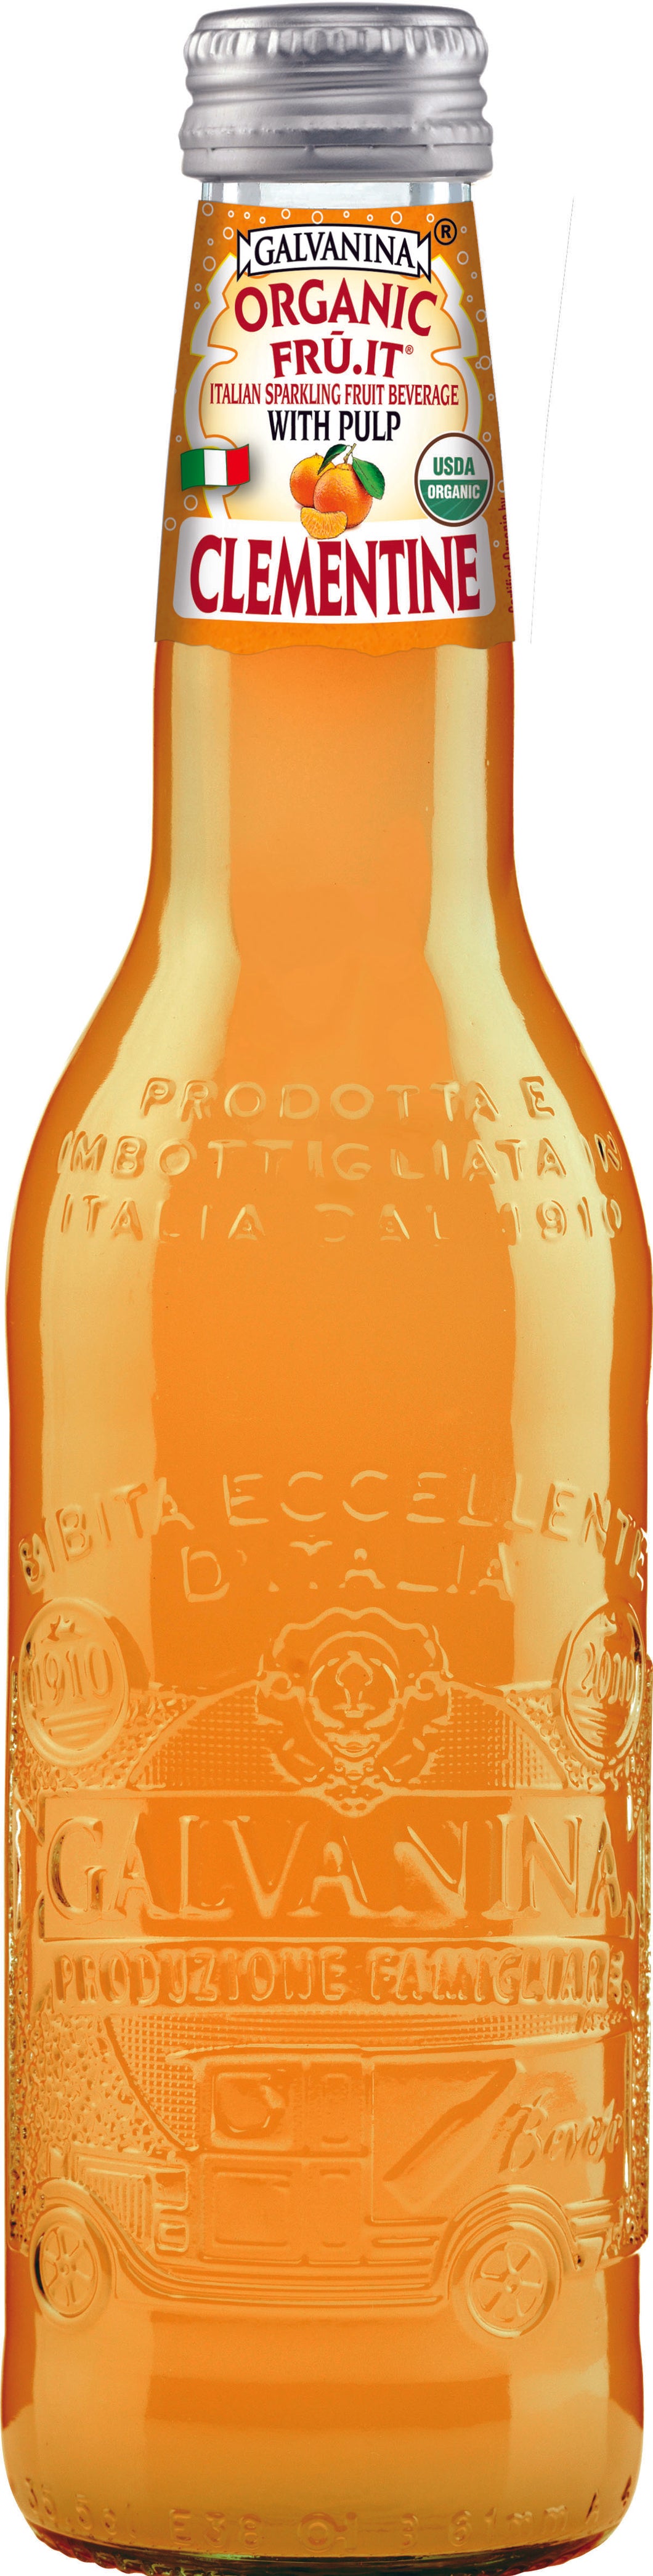 Galvanina - Clementine Soda - 355ml (12 fl oz)